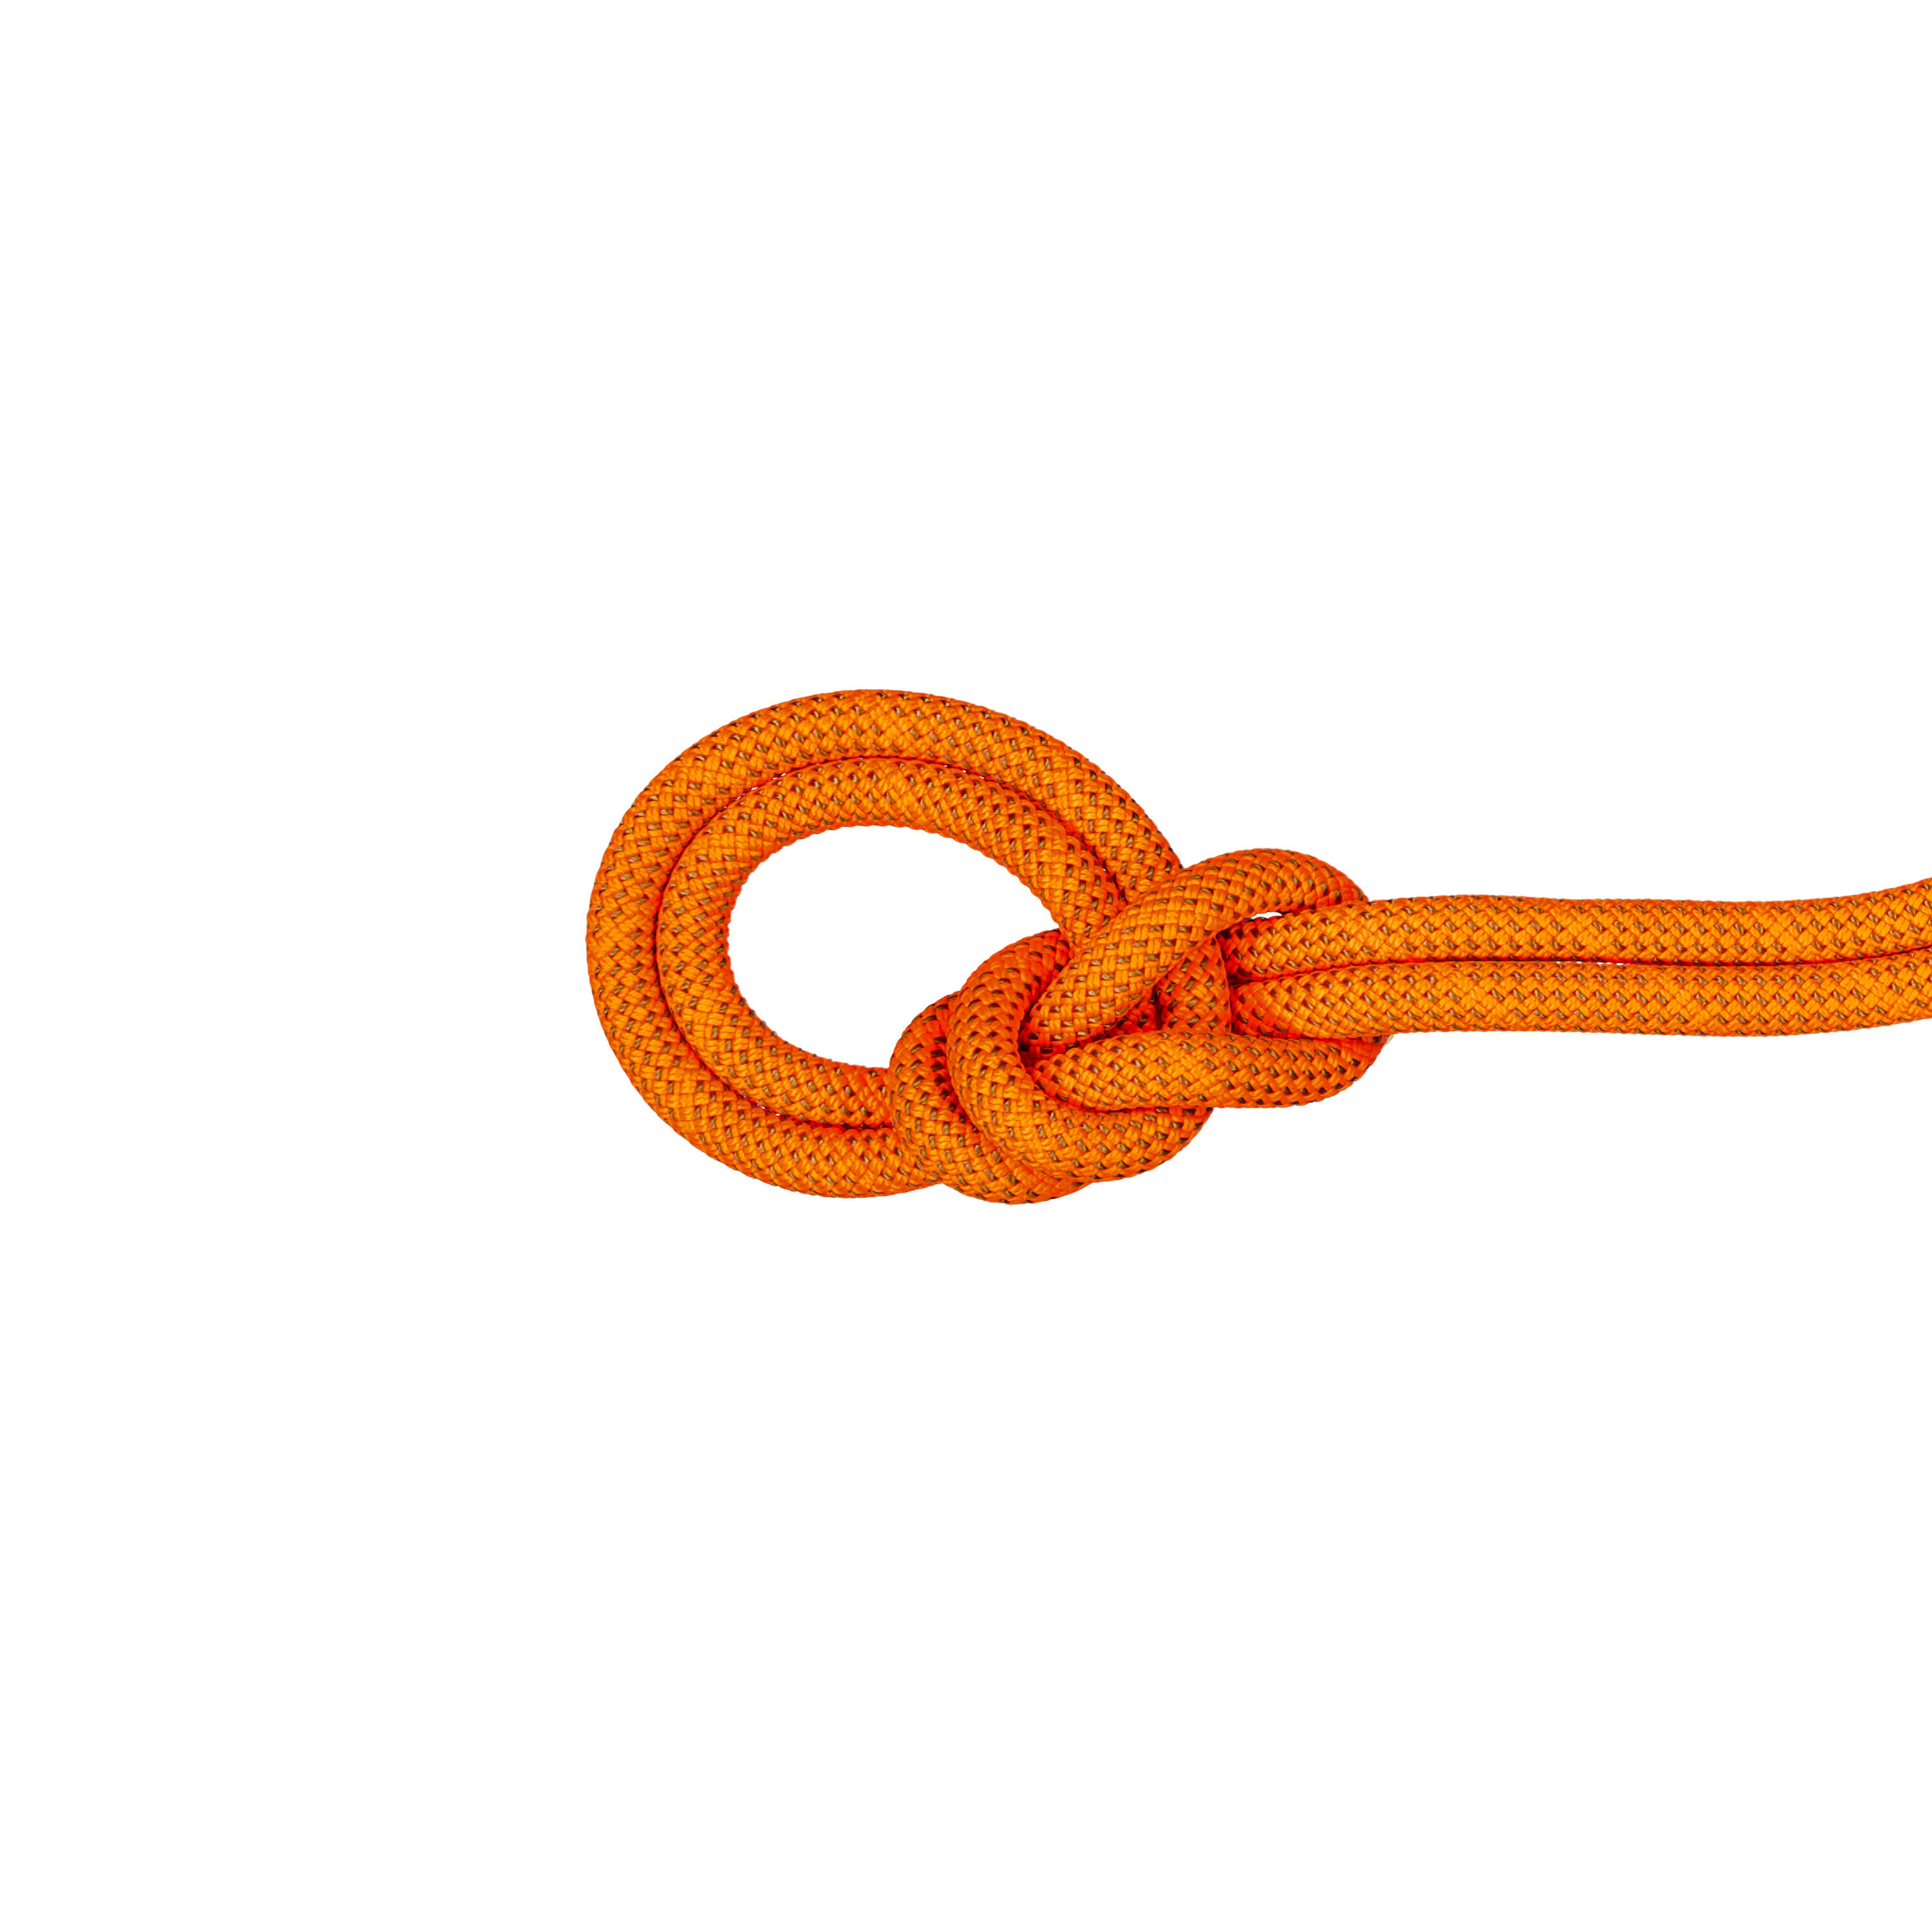 MAMMUT Crag Dry Single Rope 9.8 mm x 60m - Orange